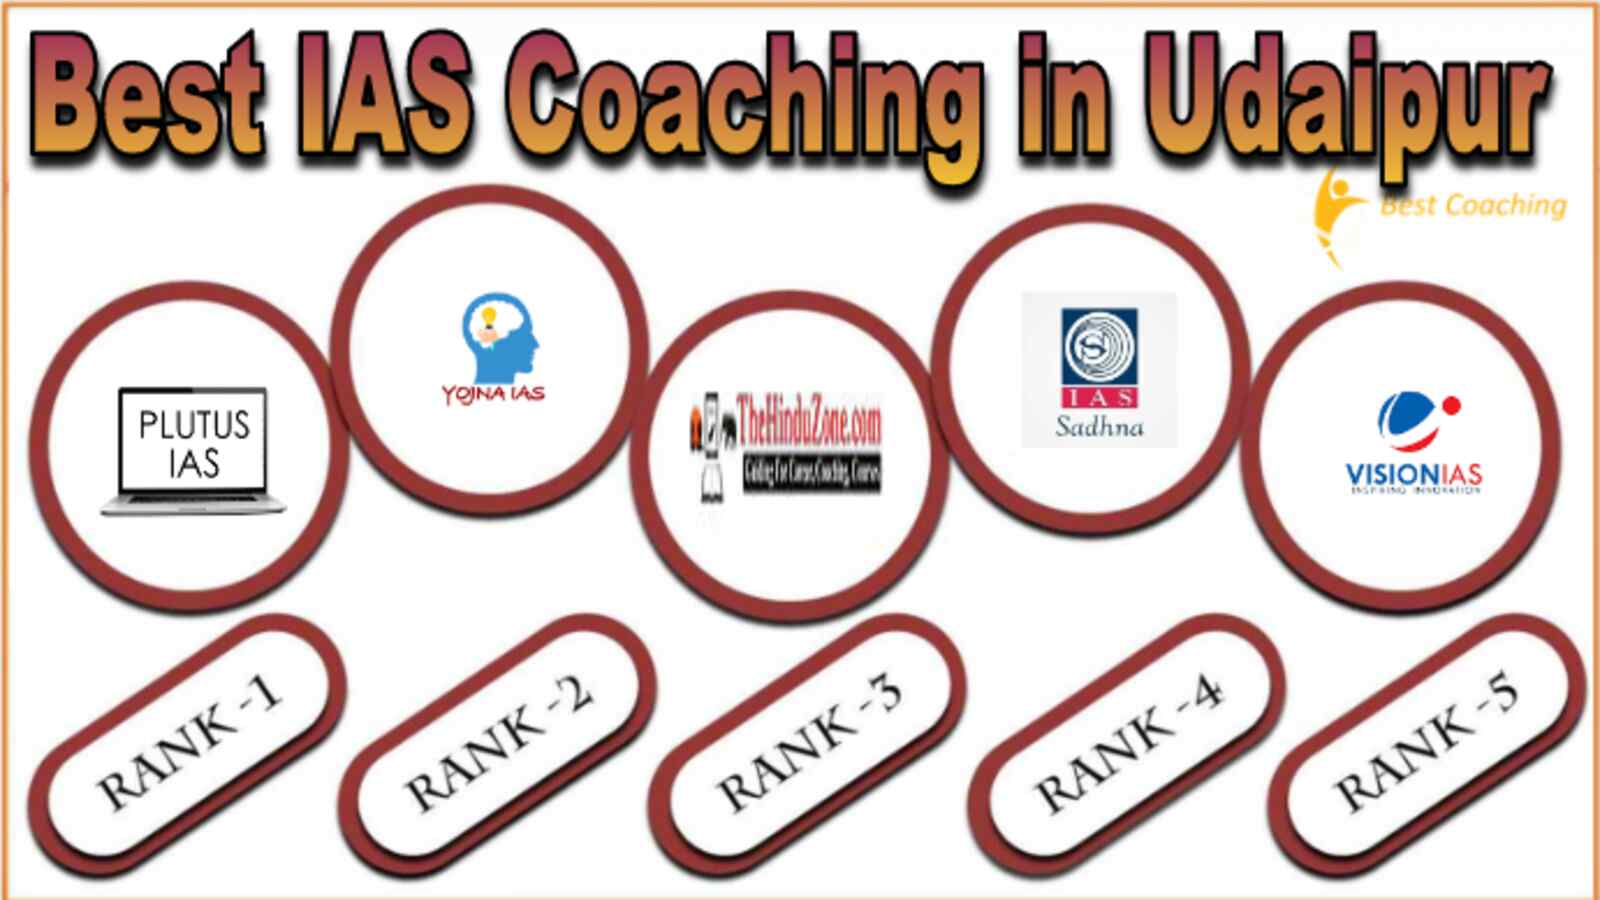 Best IAS Coaching in Udaipur